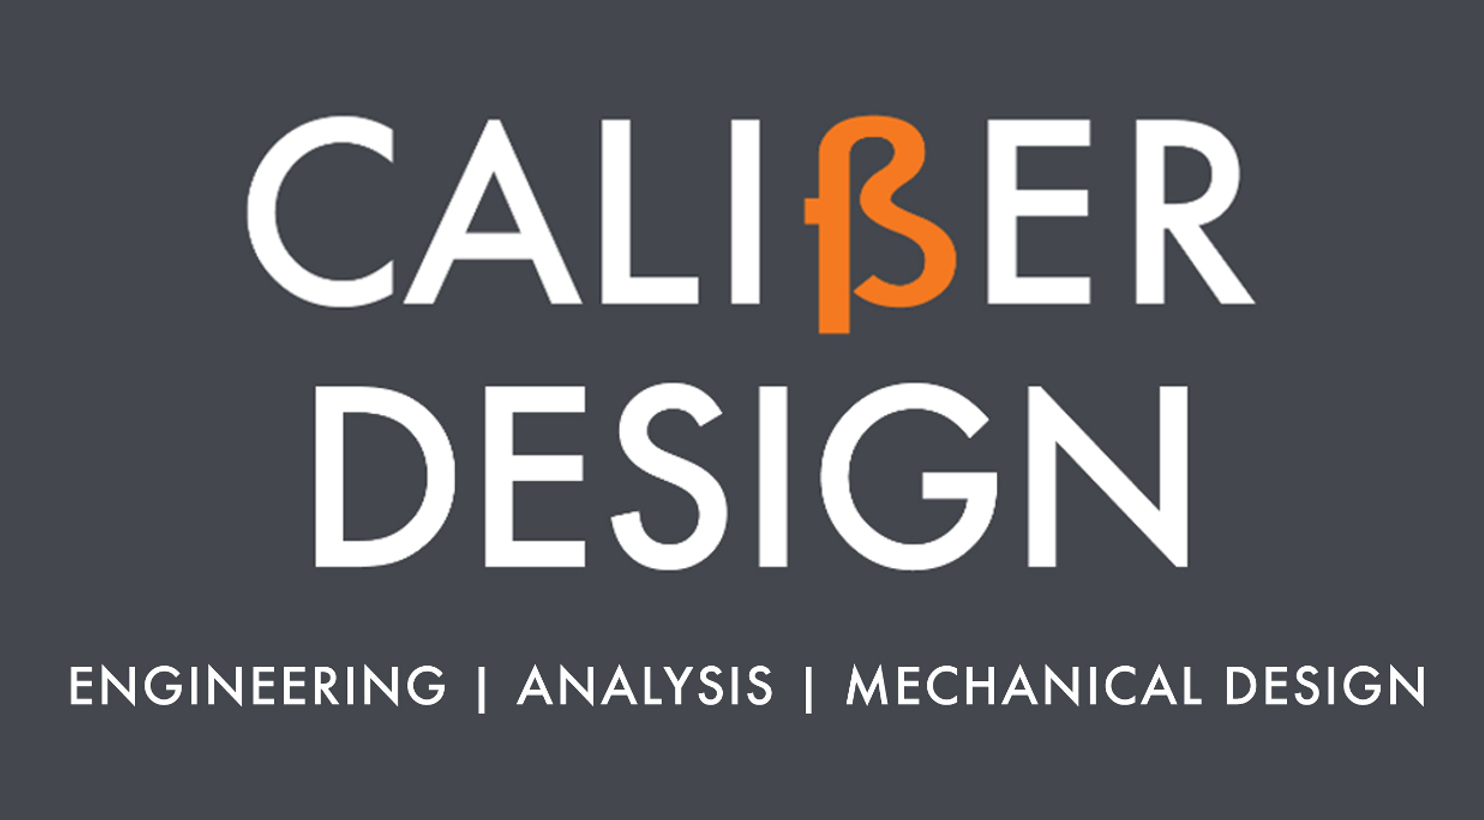 Caliber Design logo square charcoal 002 002